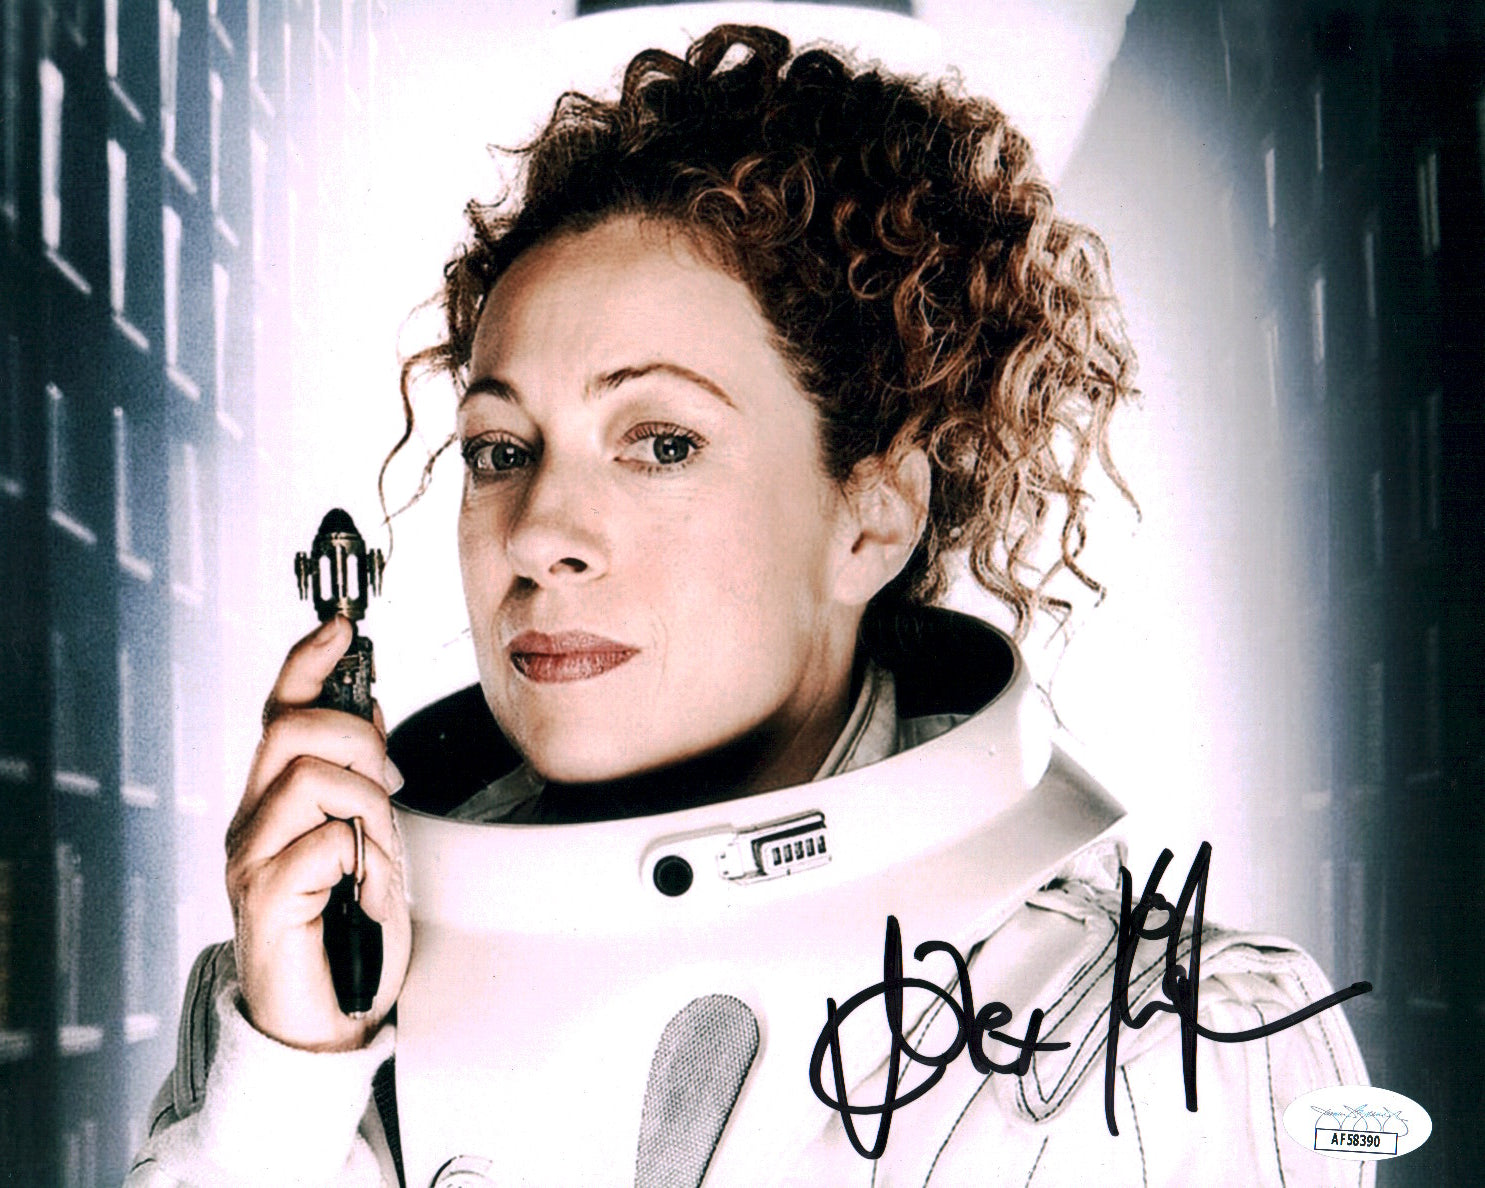 Alex Kingston Doctor Who 8x10 Signed Photo JSA COA Certified Autograph